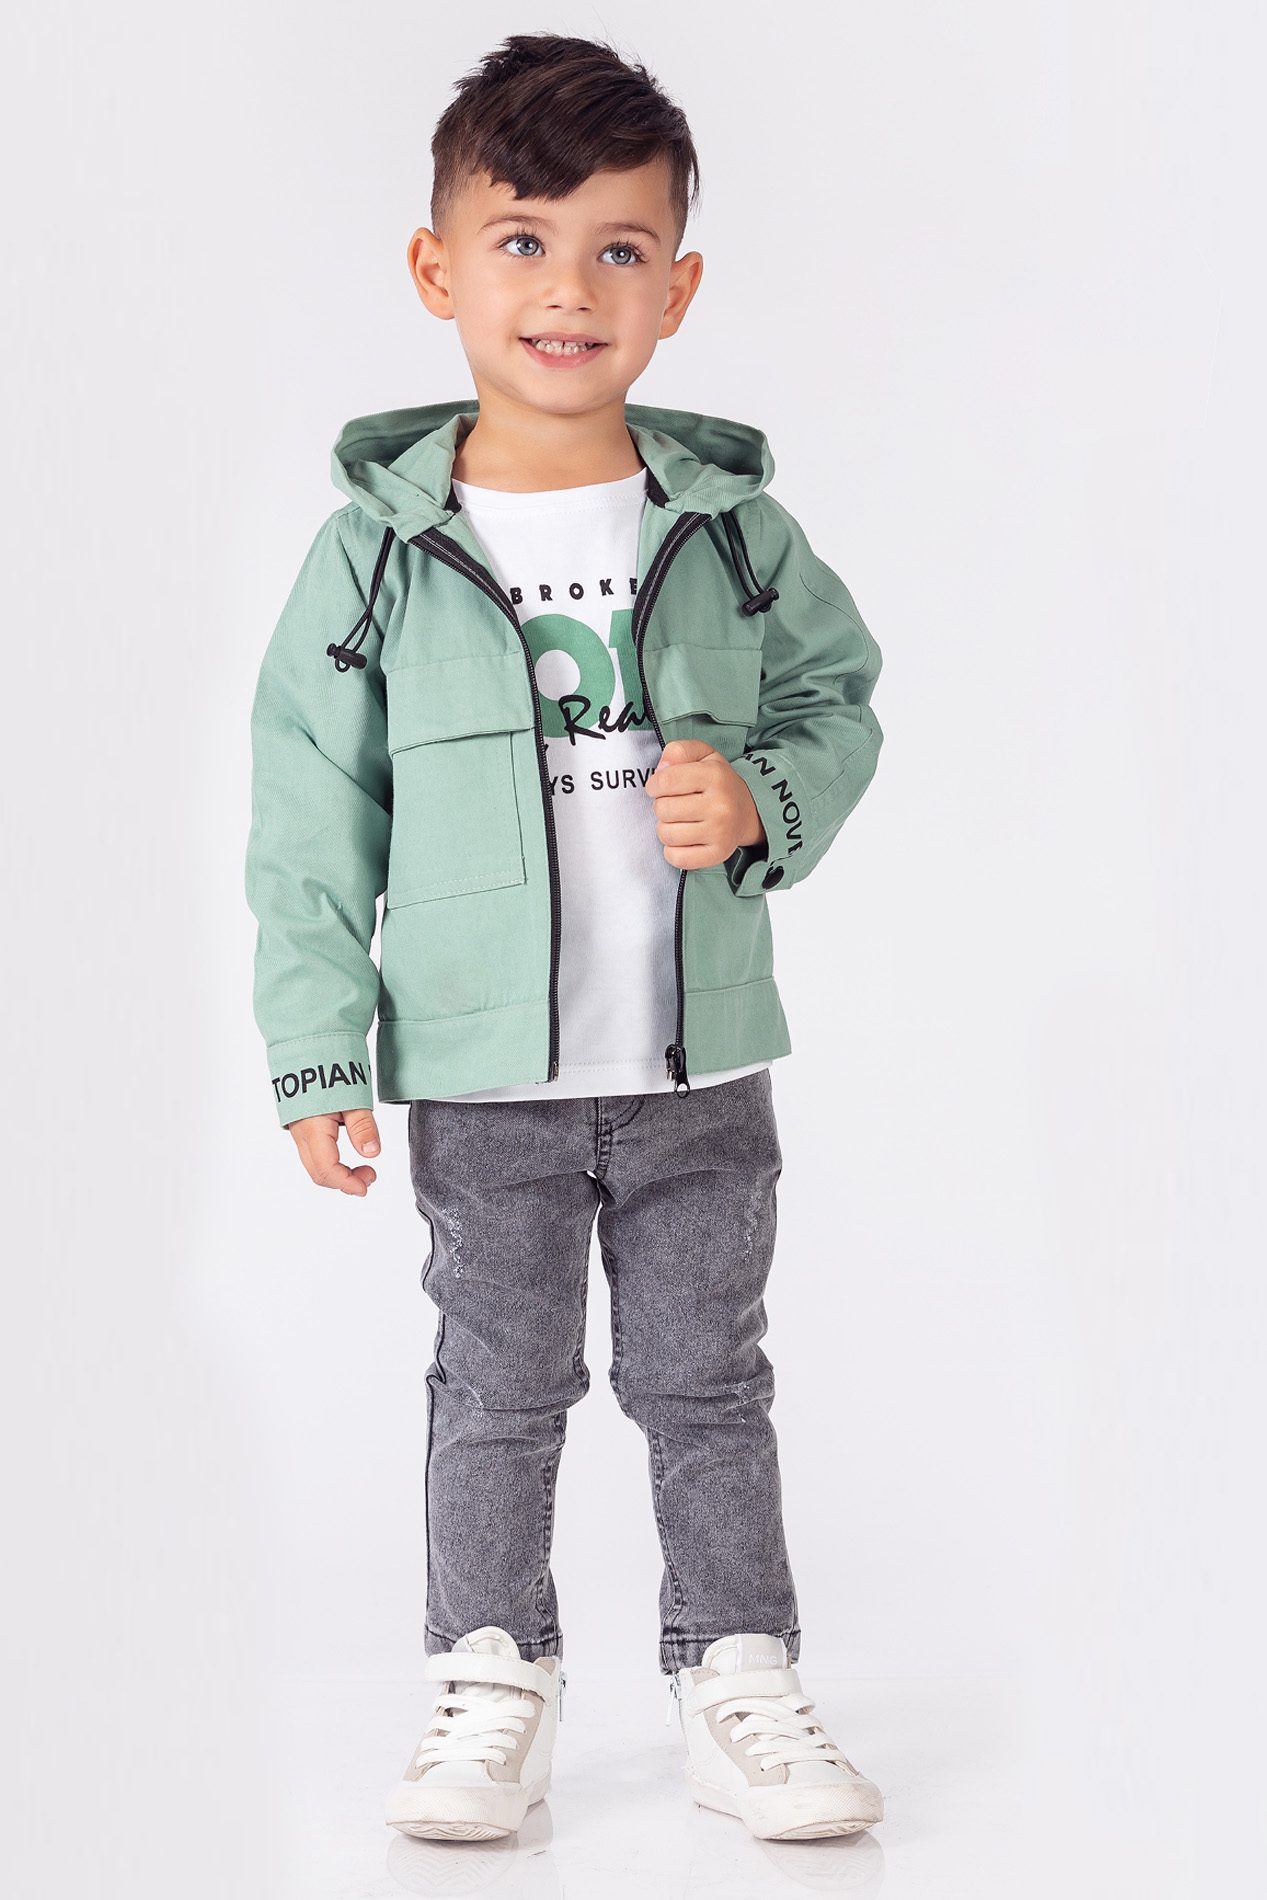 Boy 3 Pieces Gabardine Suit Set (Jacket + T-Shirt + Jean) / 2-5Y Or 6-9Y - Kids Fashion Turkey